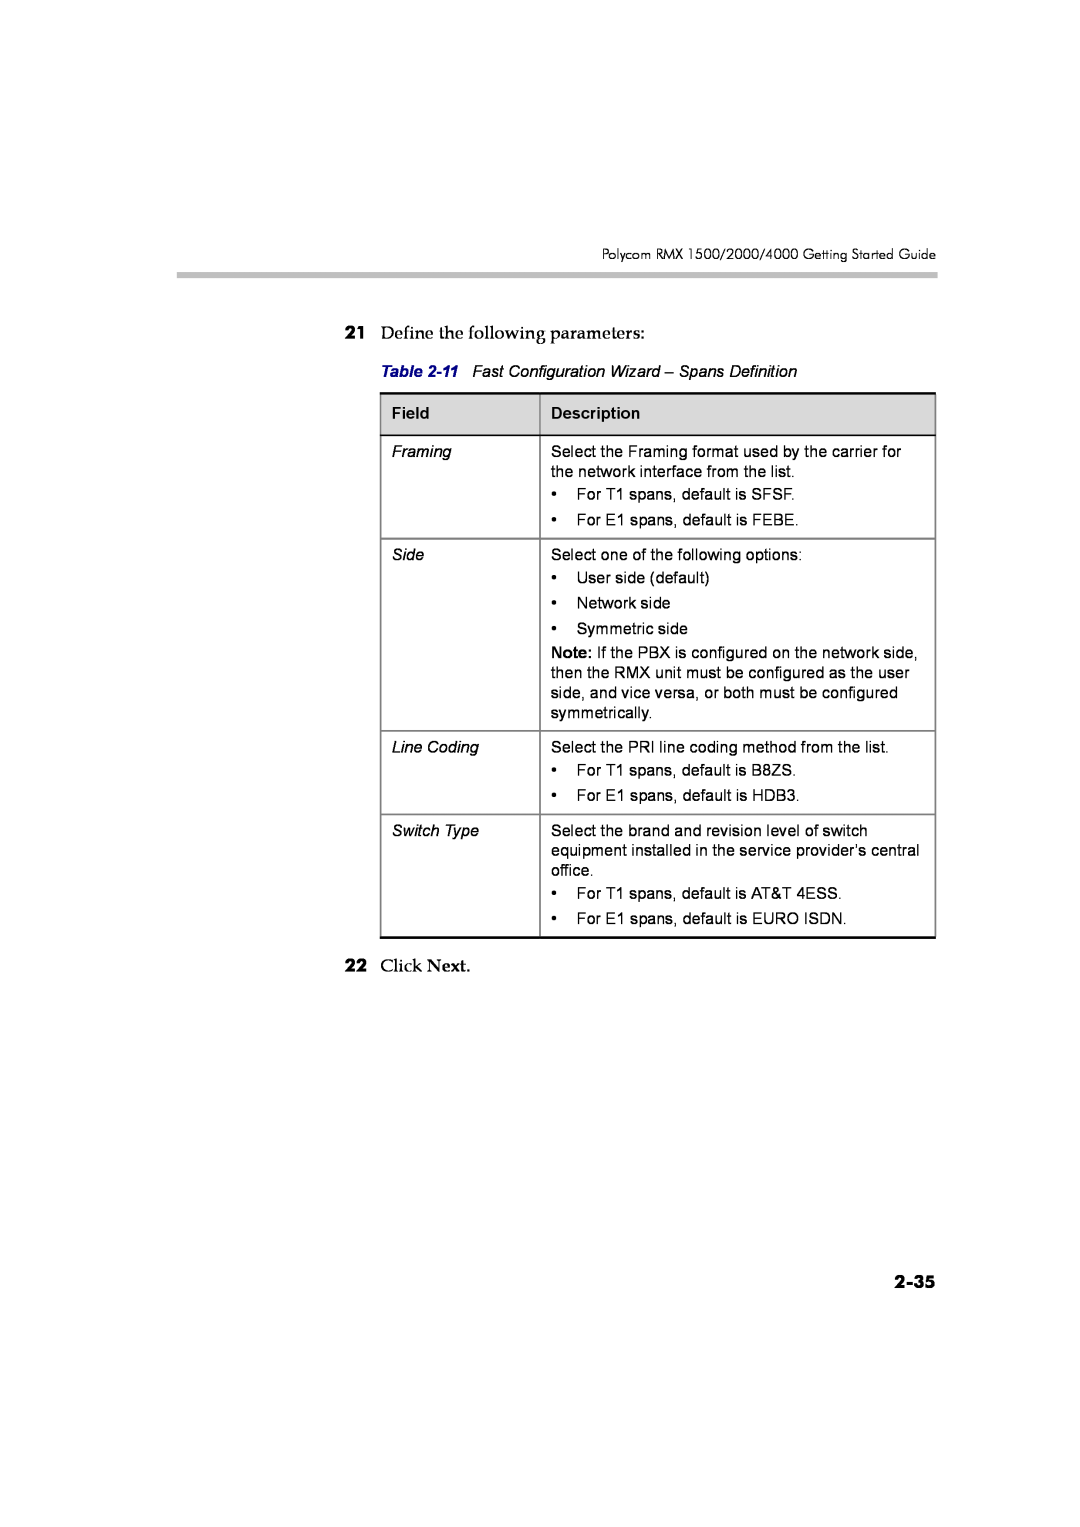 Polycom DOC2560B manual 2-35, Define the following parameters, Click Next, Field, Description 